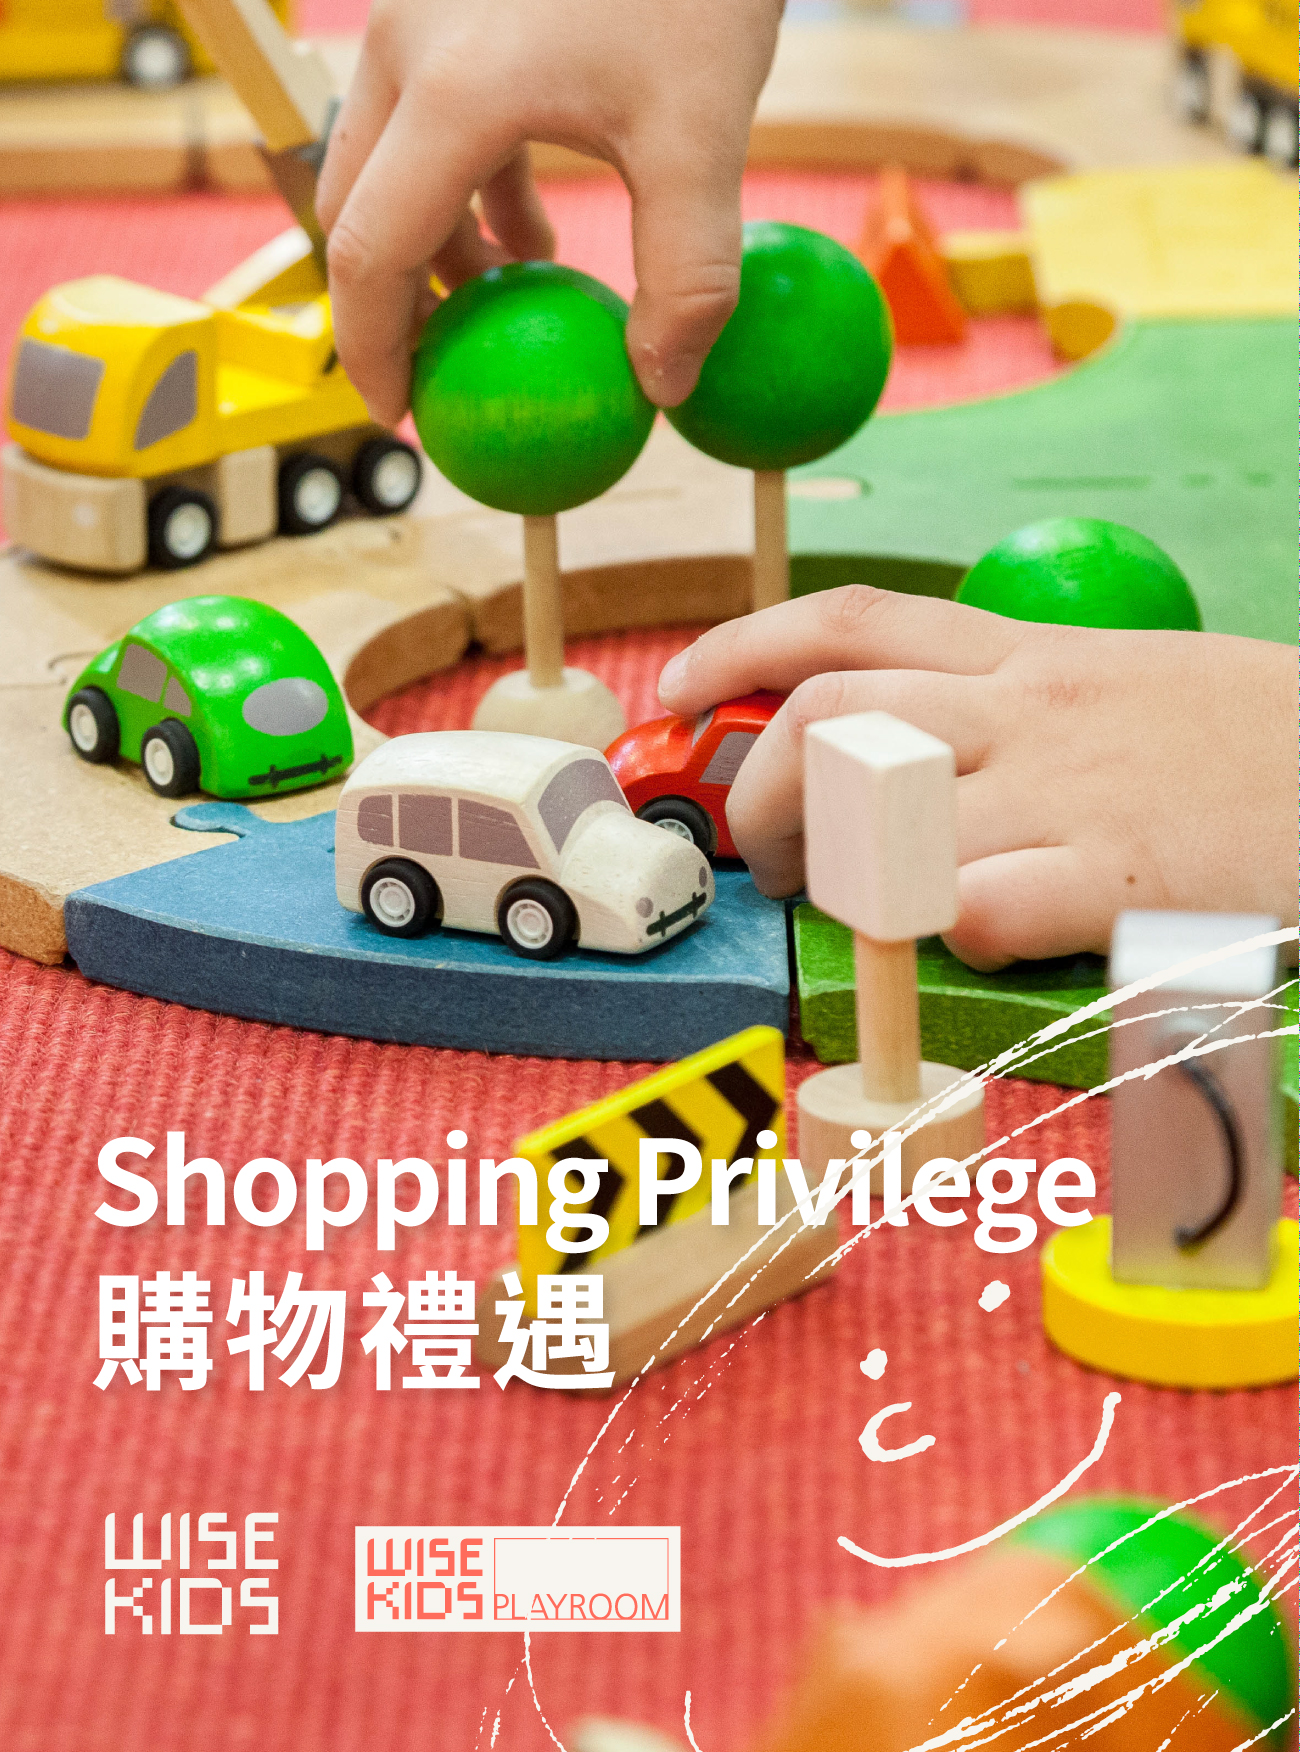 Wise-Kids Shopping Privilege